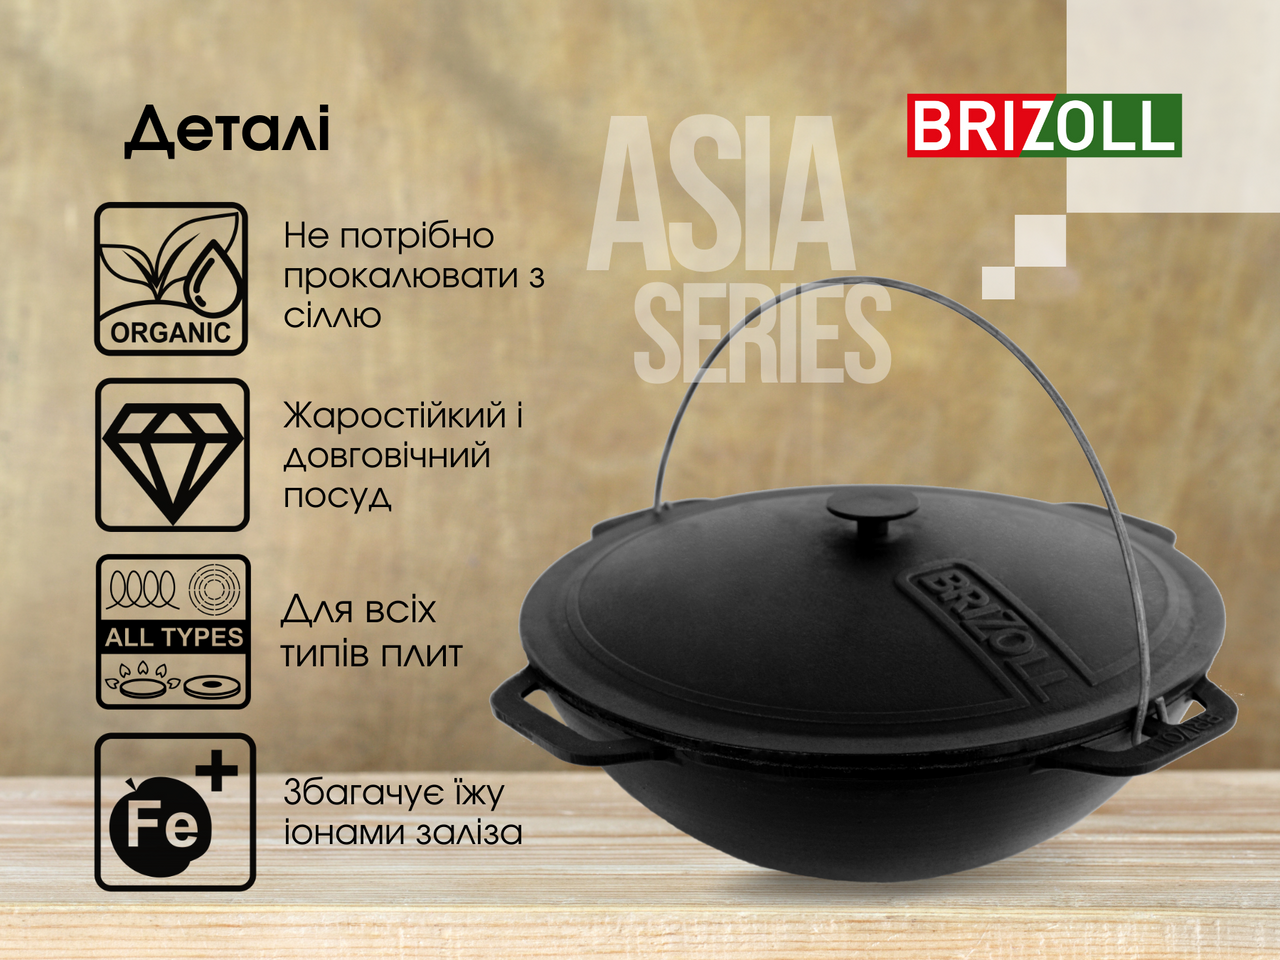 Cast iron asian 8 L cauldron WITH A LID, a tripod and a bag